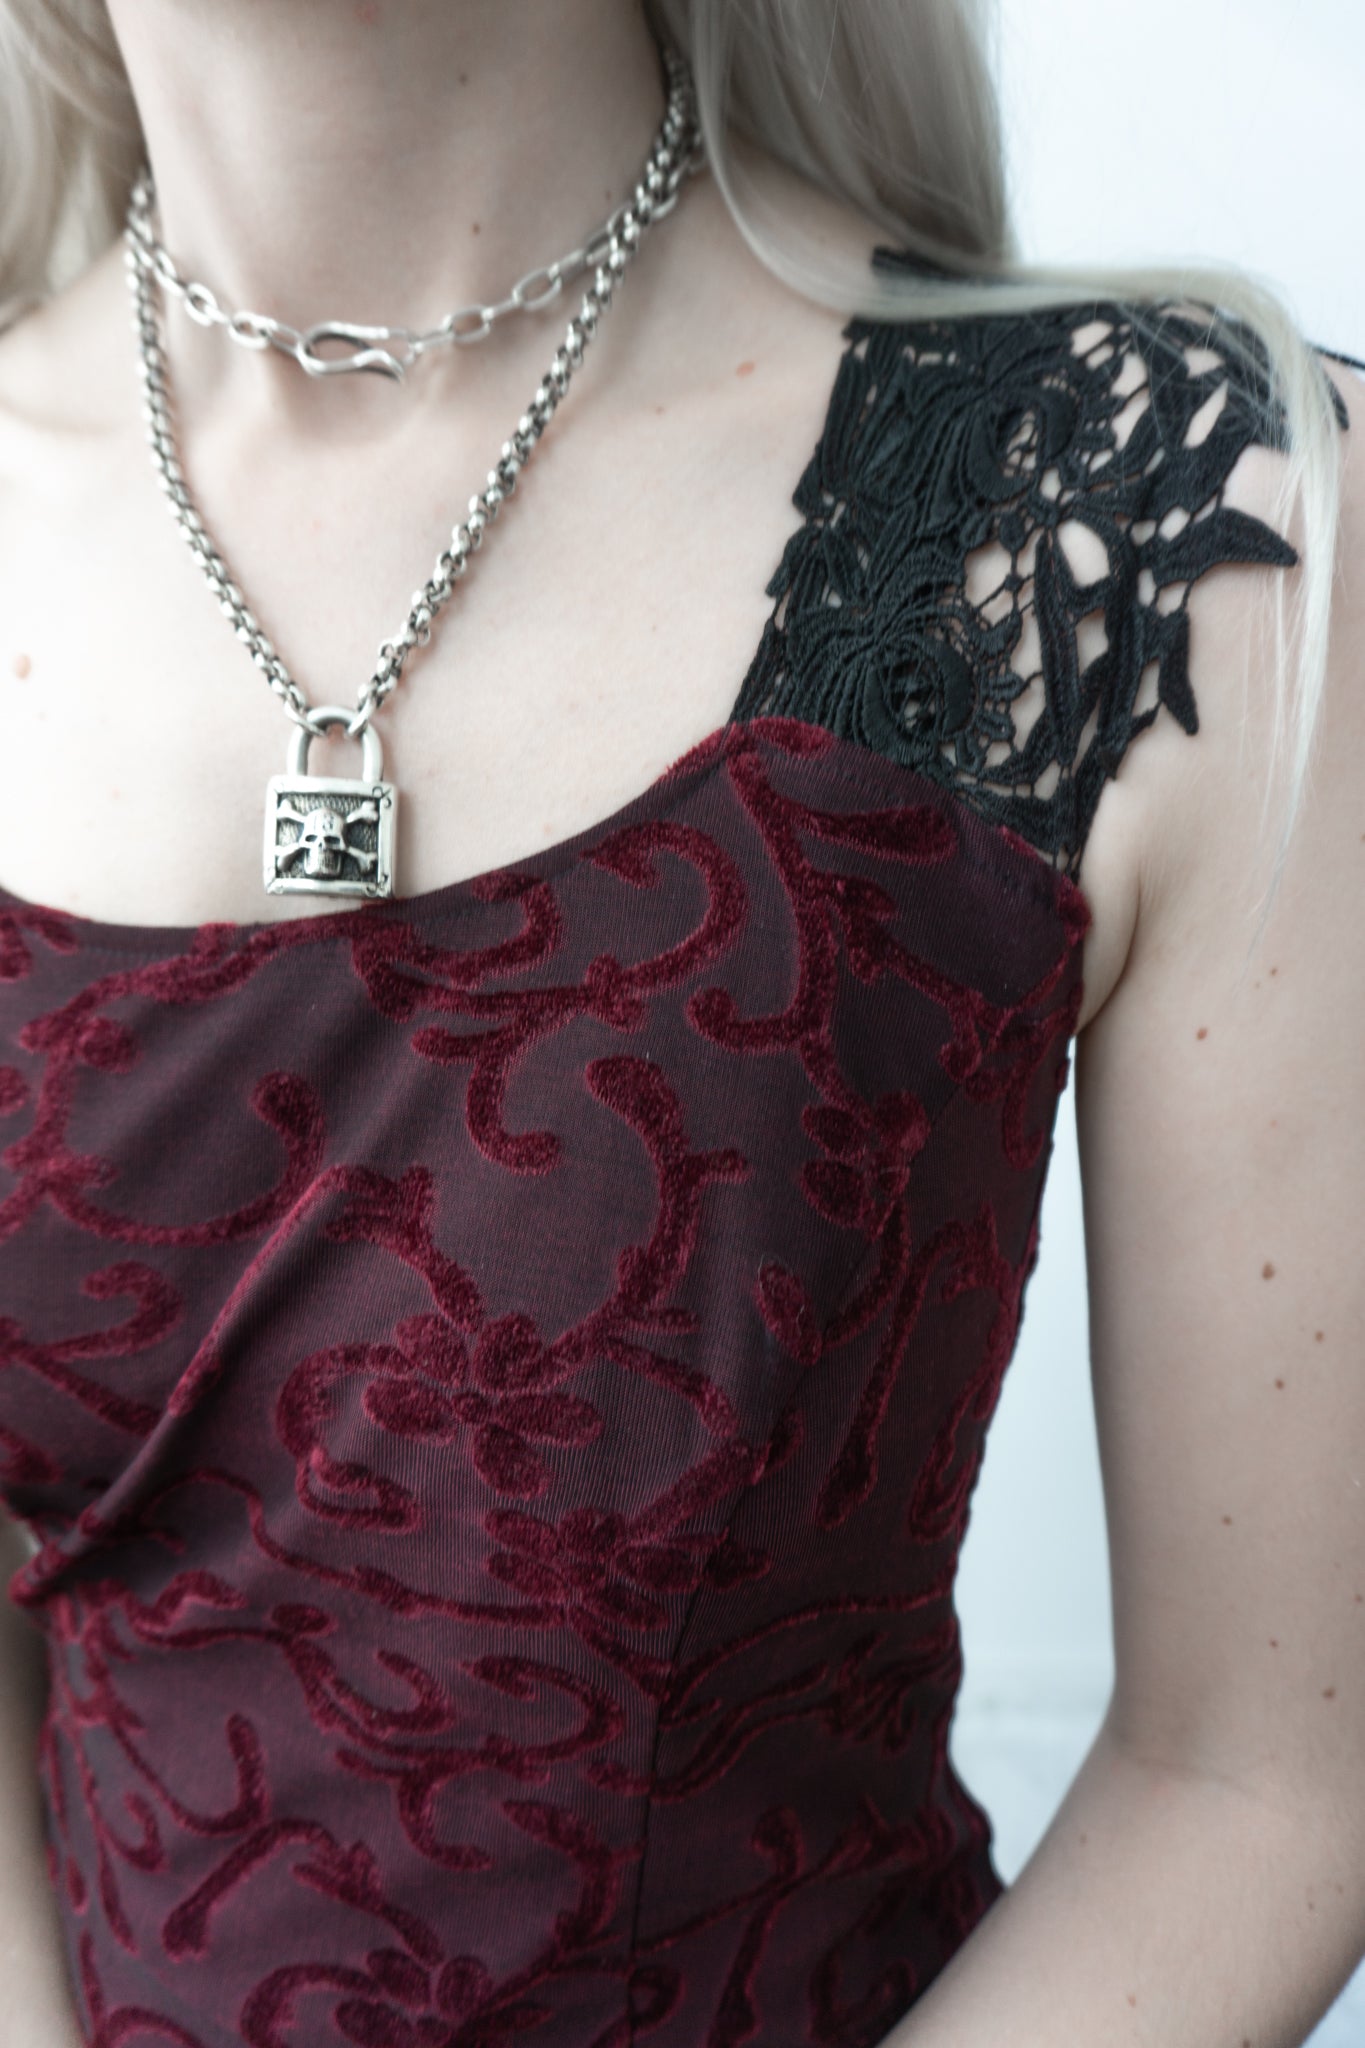 Maxi dress lace velvet black red